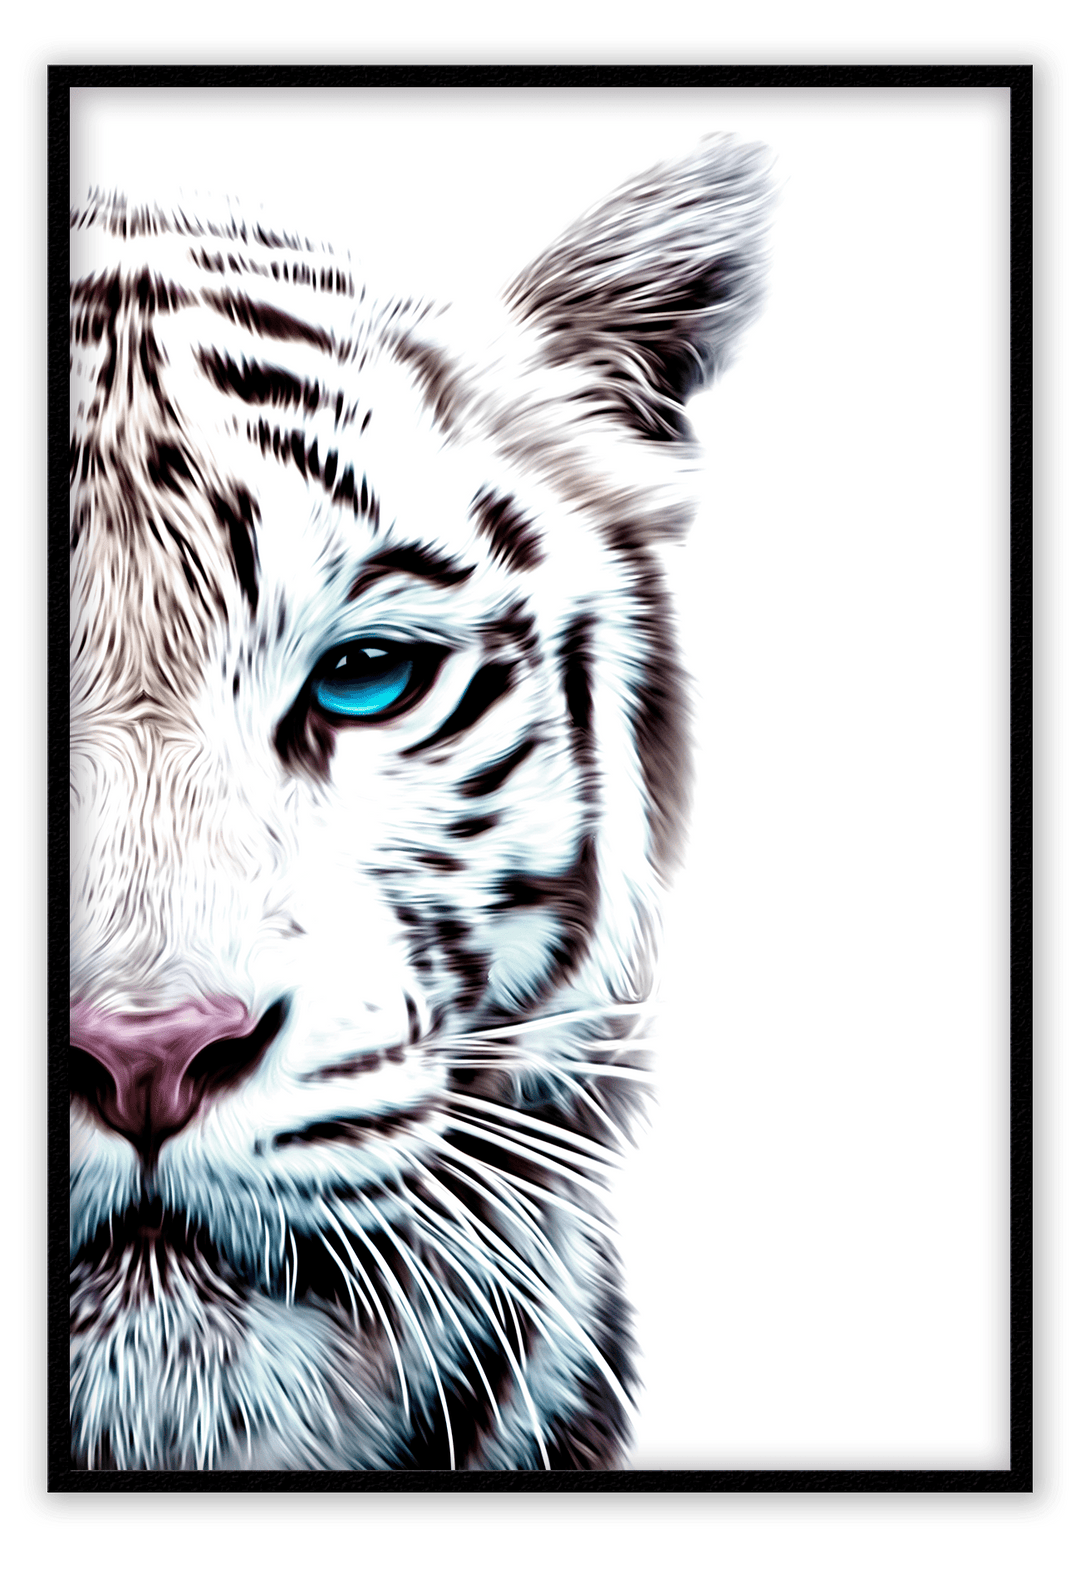 Canvas Print 50x70cm / Black Tiger Tiger Wall Art : Ready to hang framed artwork. Brand